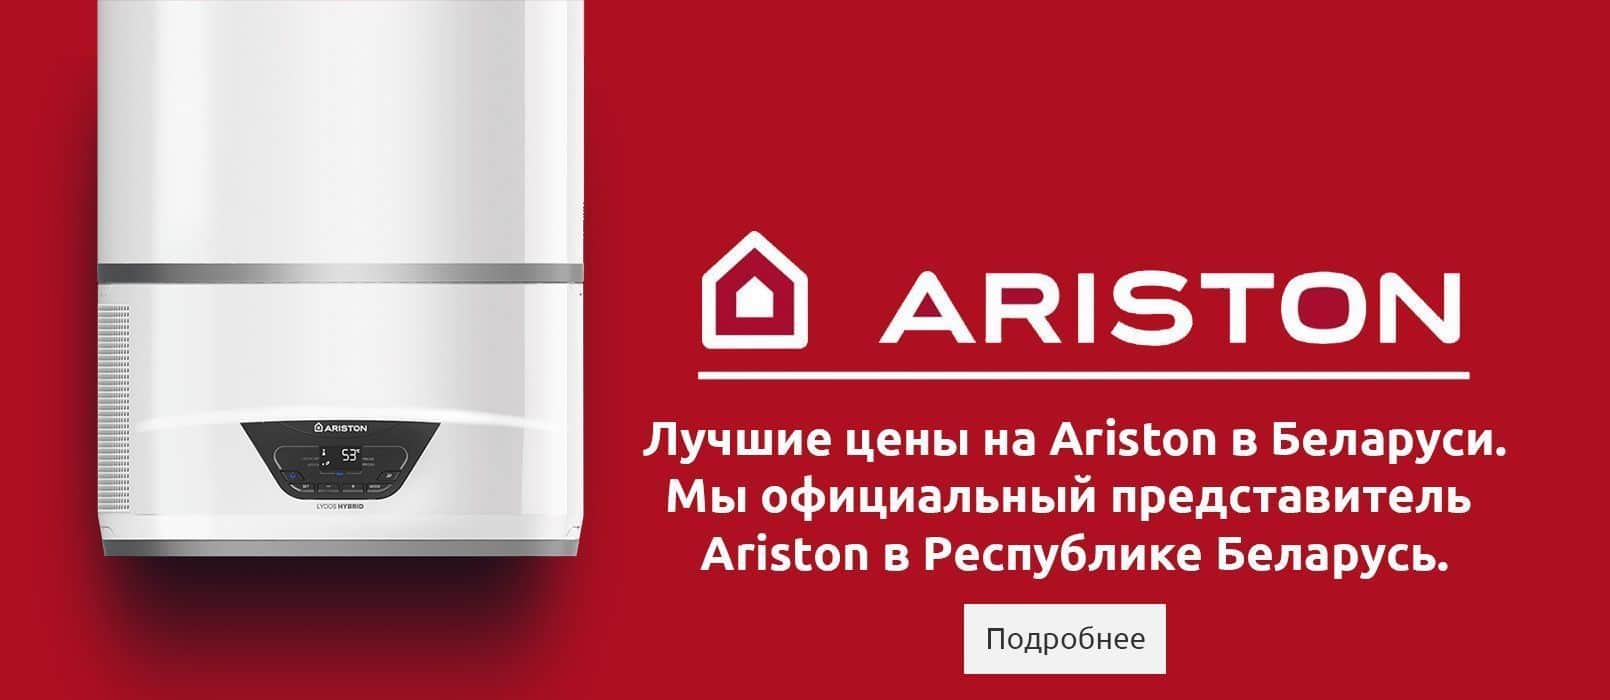 Ariston страна. Ariston водонагреватель reklama banner. Реклама Аристон. Котлы Аристон реклама. Ariston водонагреватели реклама.